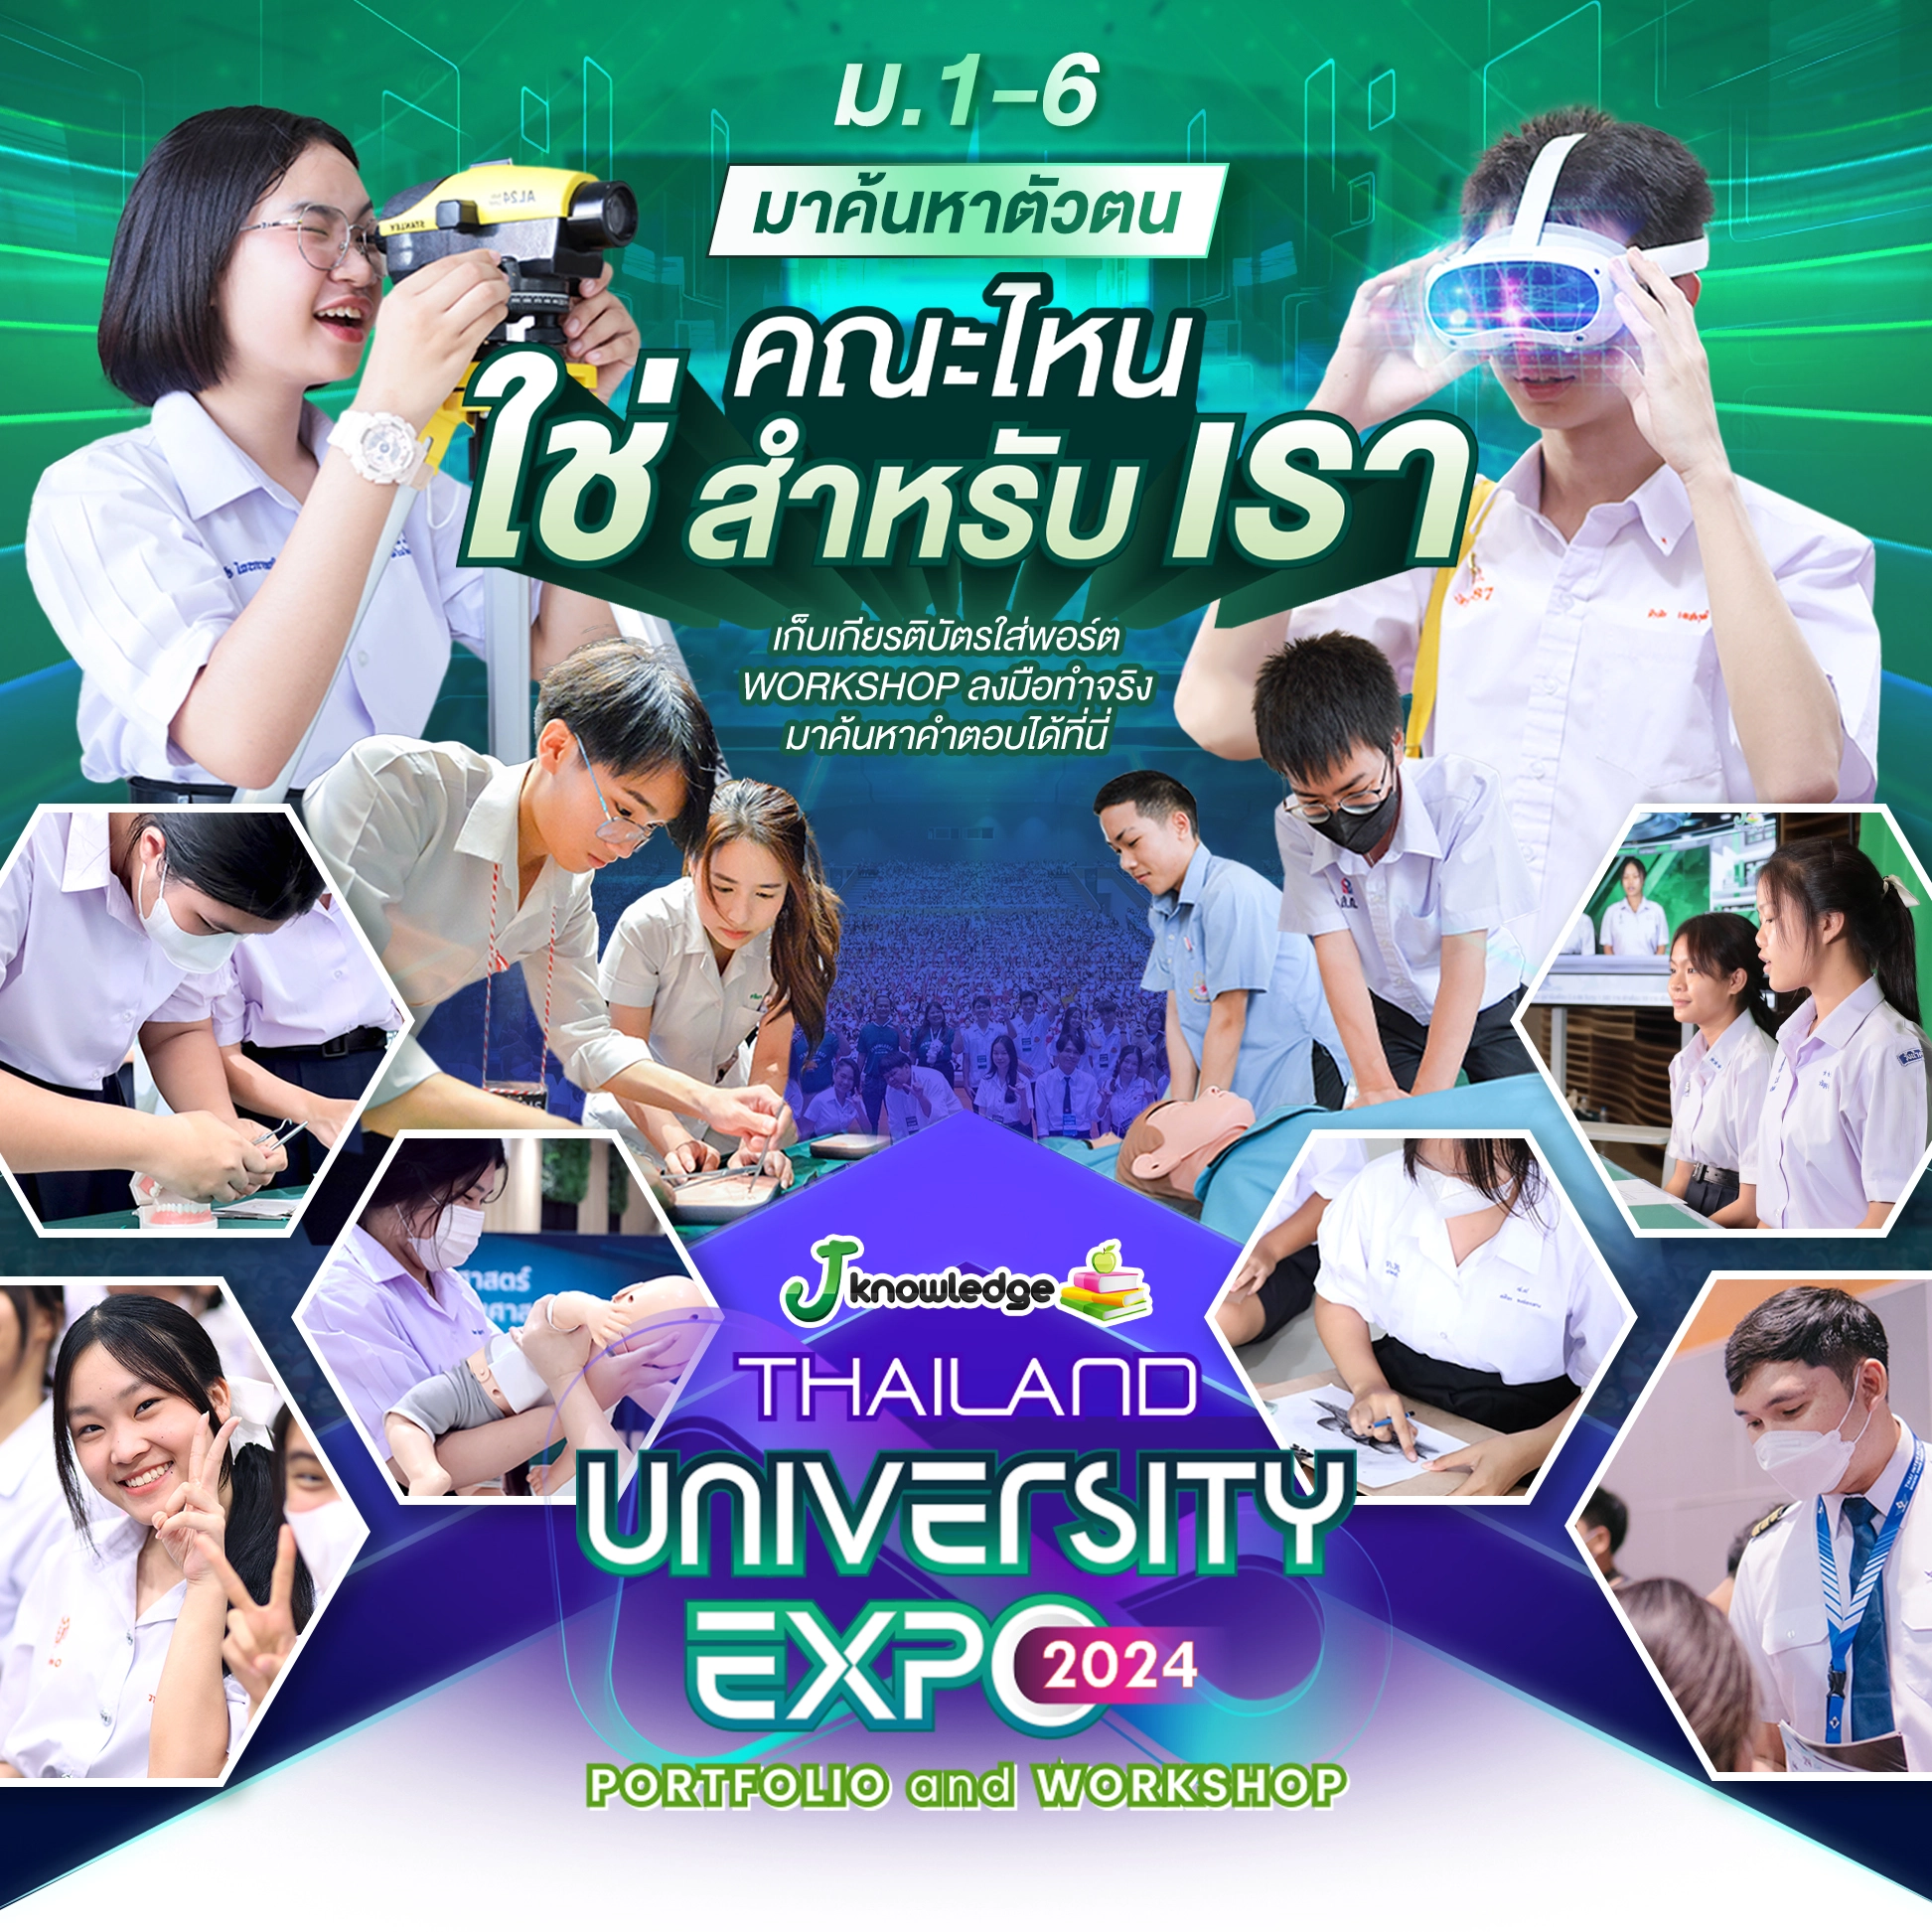 Thailand University Expo 2024